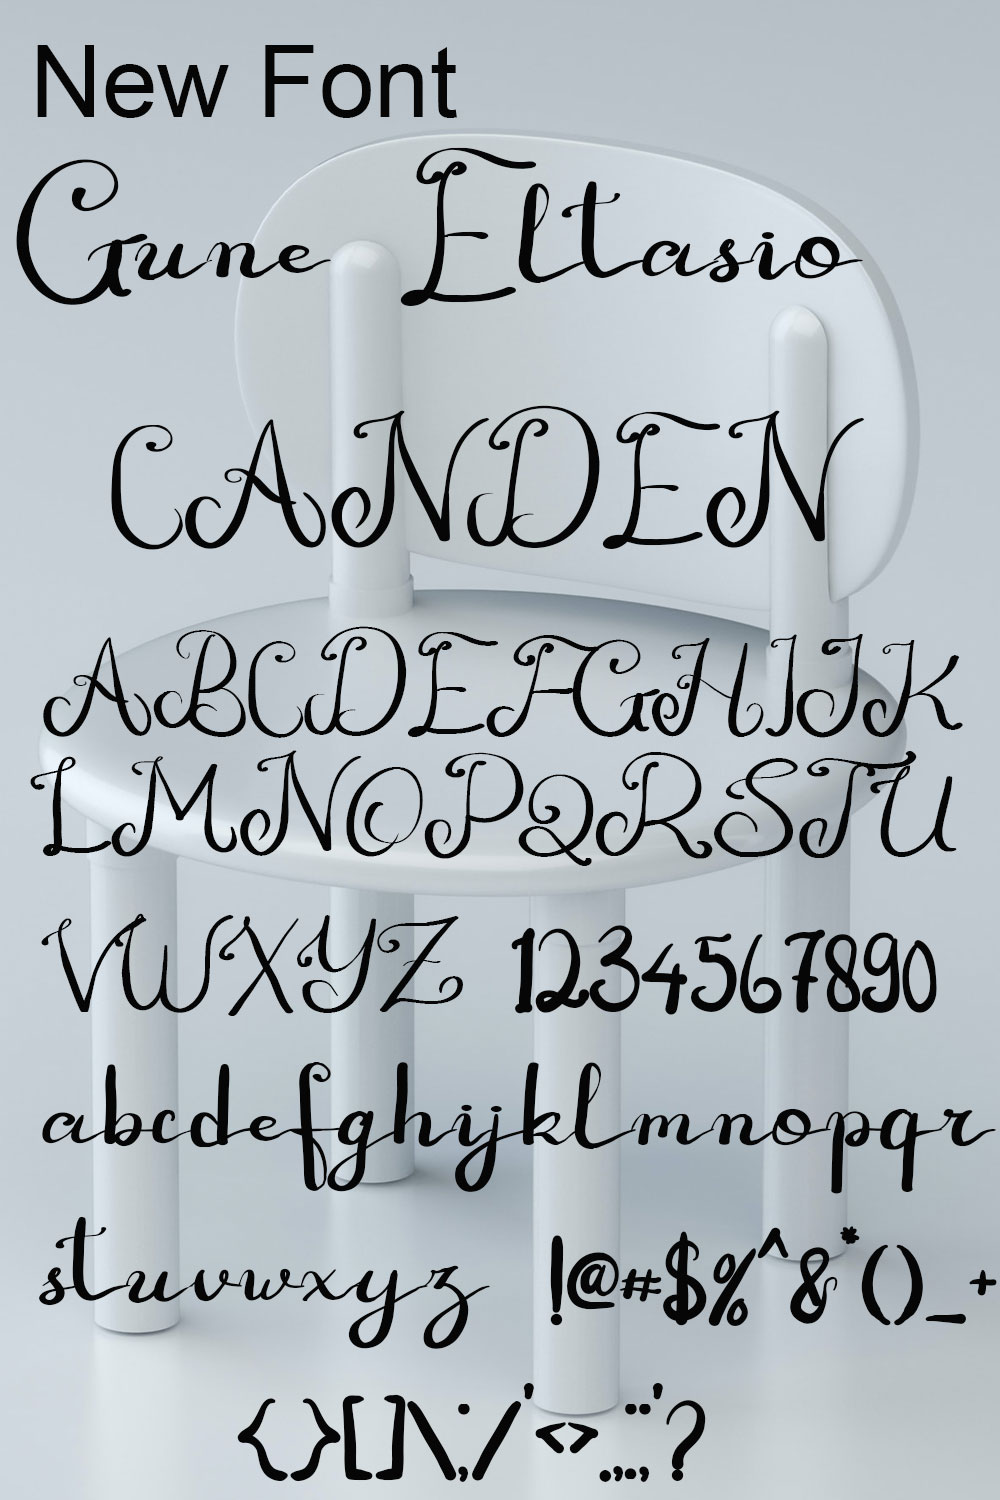 pinter GUNE ELTASIO Font.